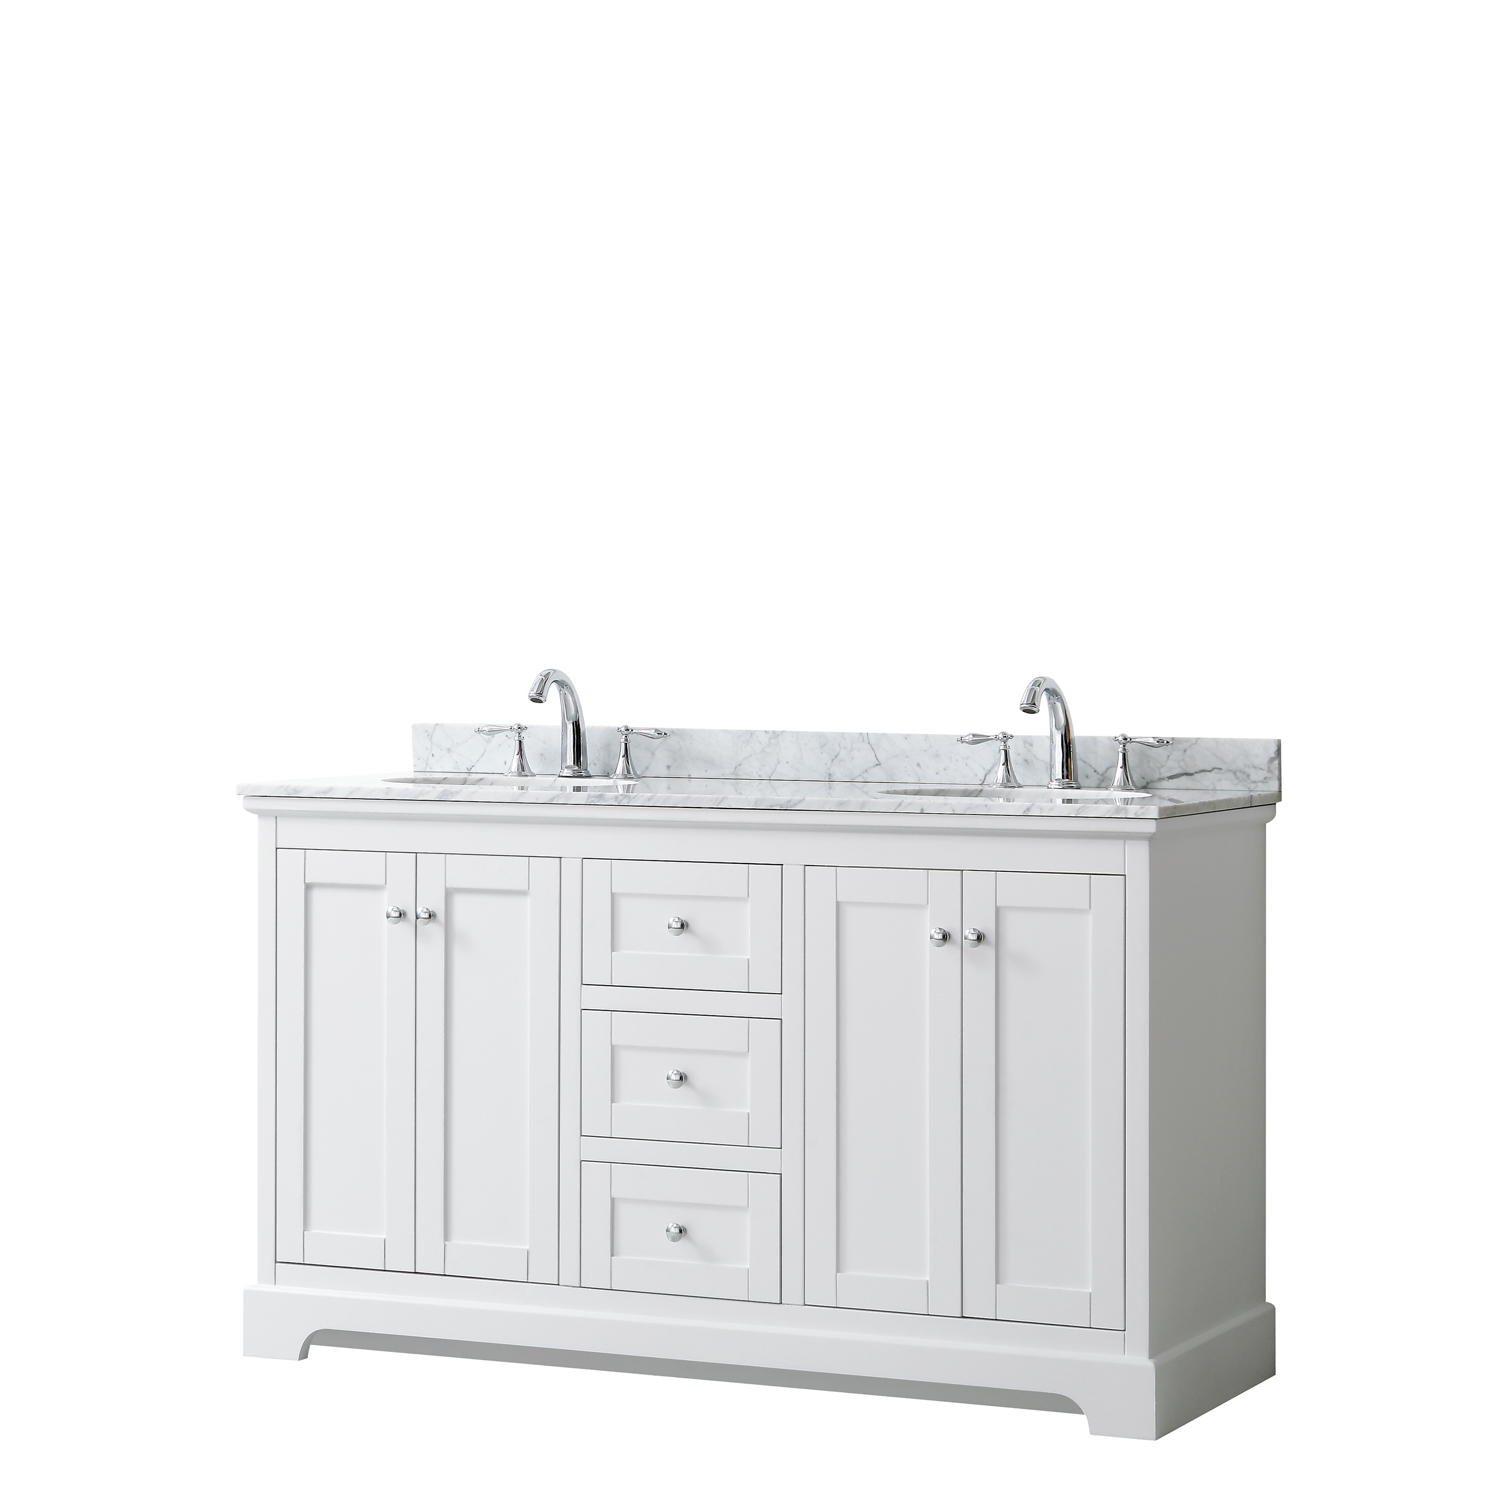 60" Double Bathroom Vanity in White, No Countertop, No Sinks, and No Mirror